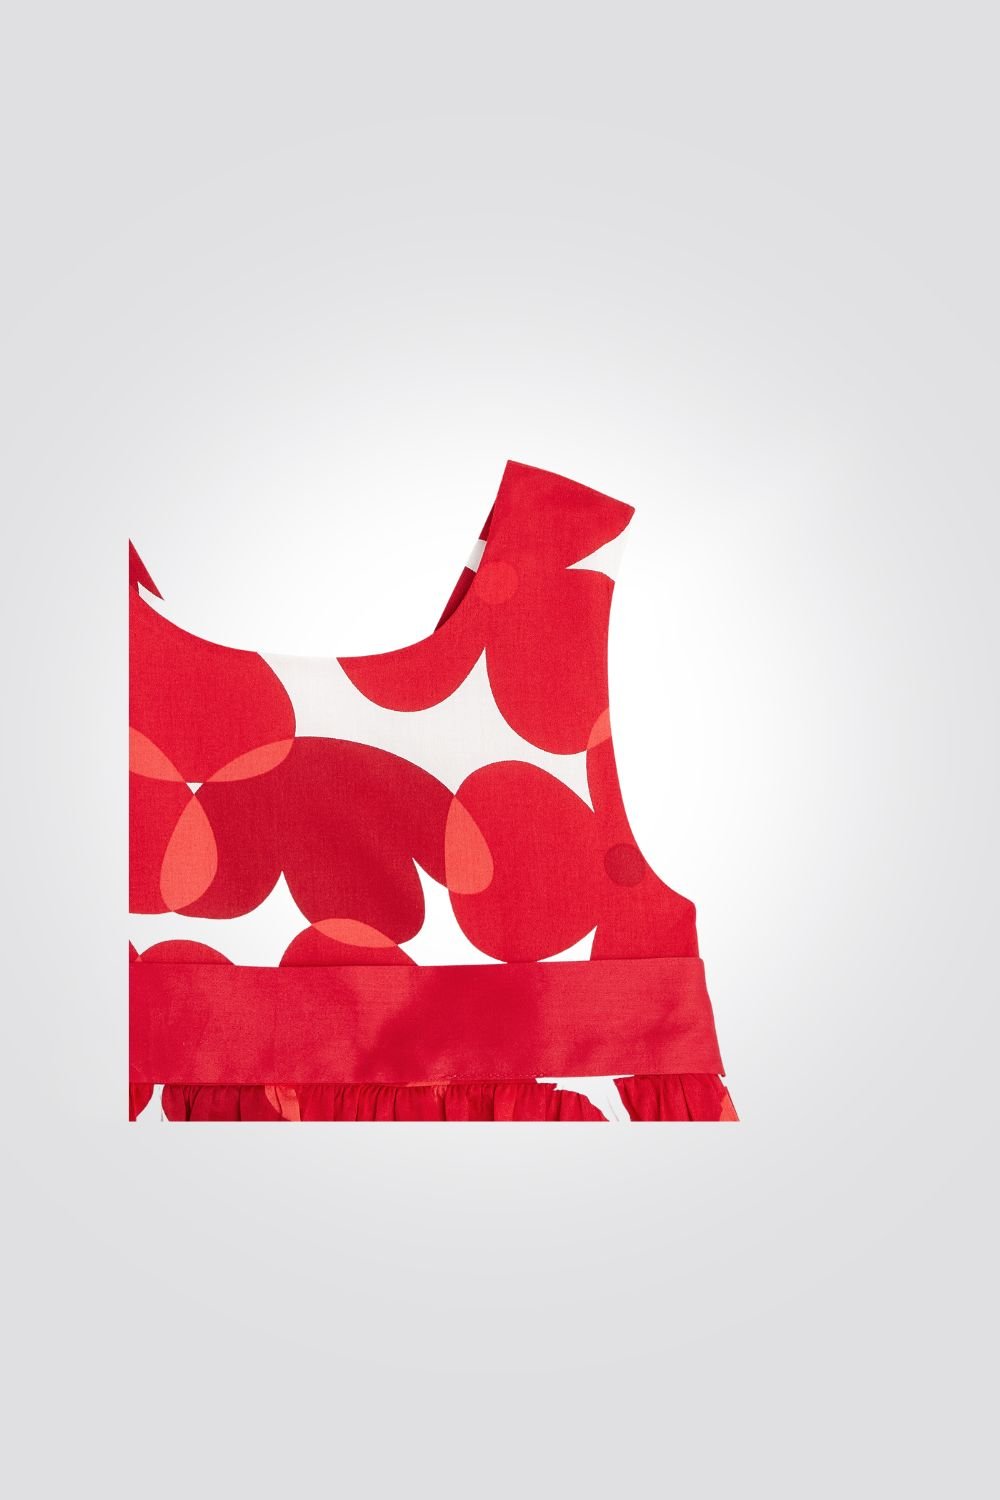 OBAIBI - שמלת תינוקות סארפן הדפס פרחים גדולים אדום לבן - MASHBIR//365